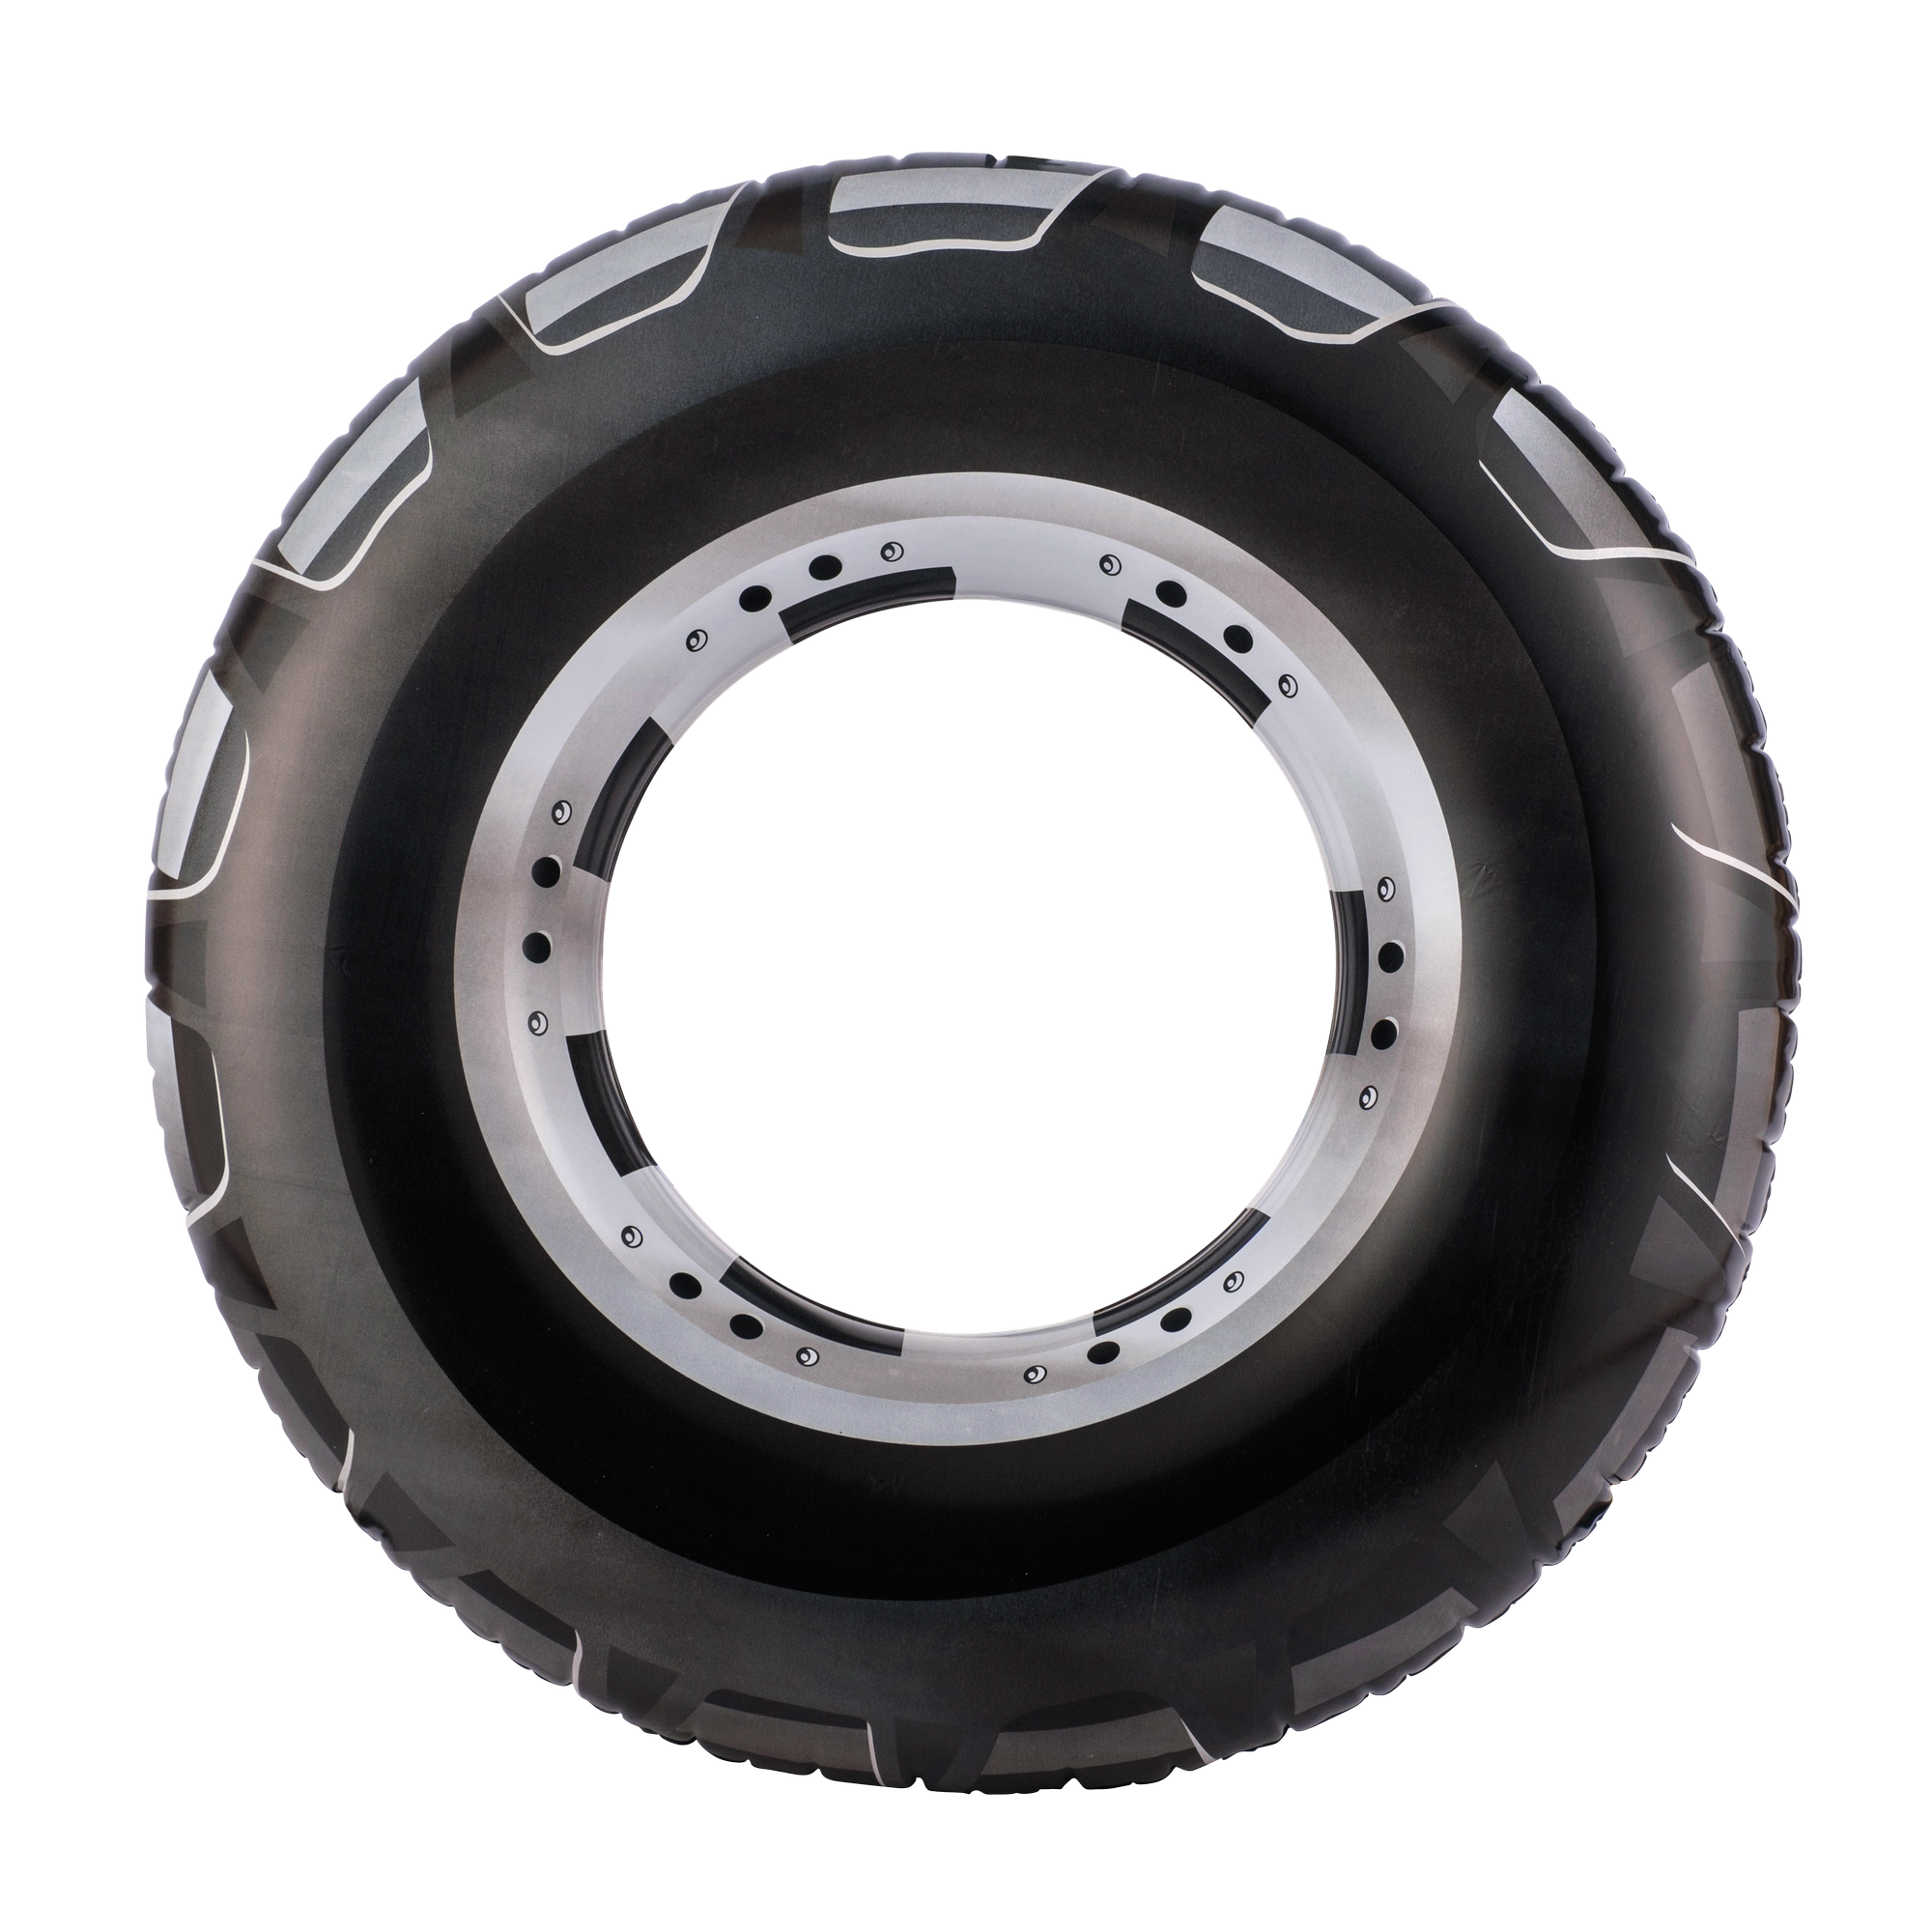 Schwimmring 'Tyre' schwarz/grau Ø 79 cm + product picture